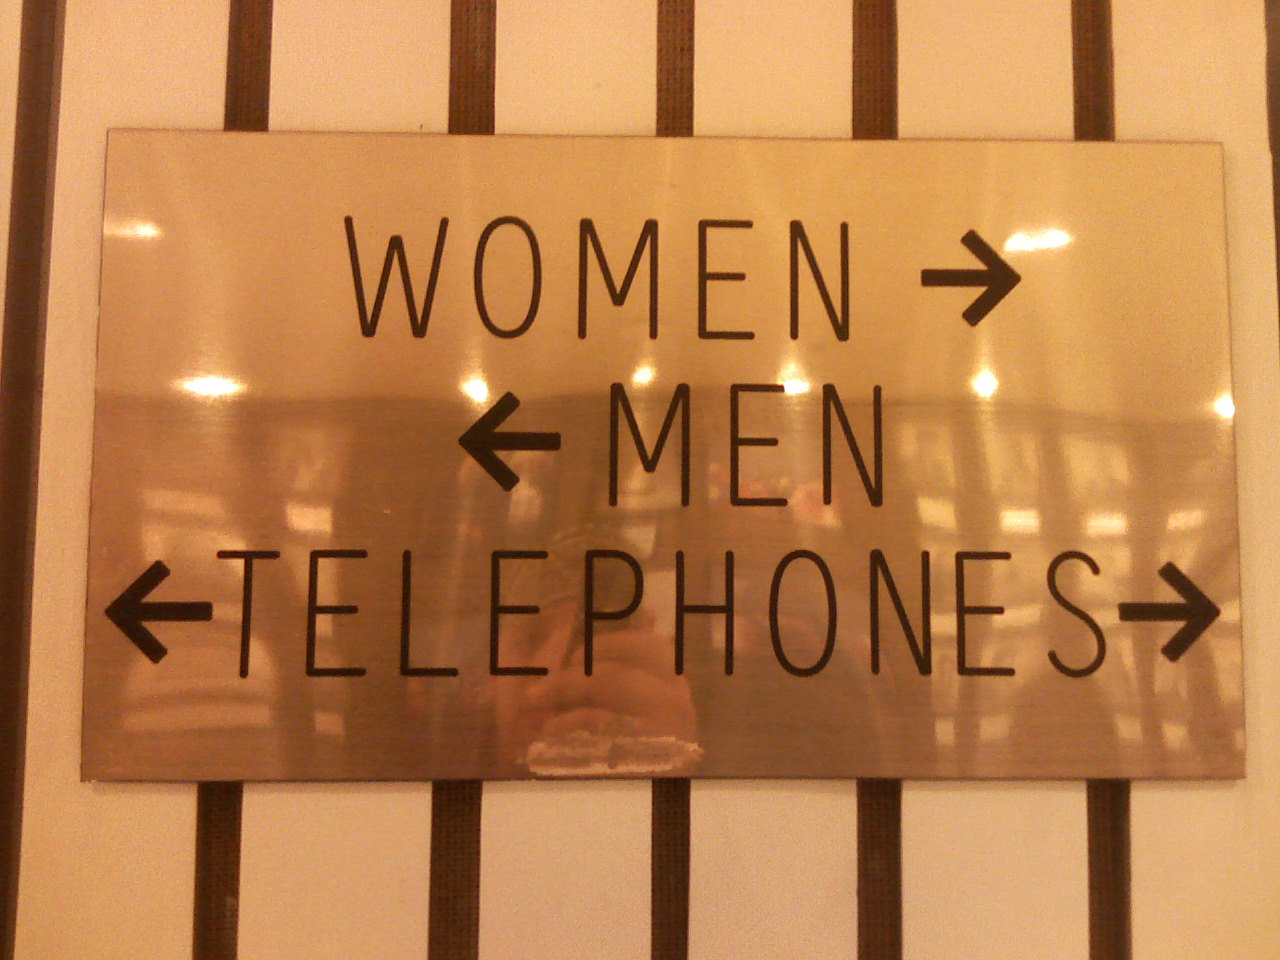 Apparentely telephones swing both ways